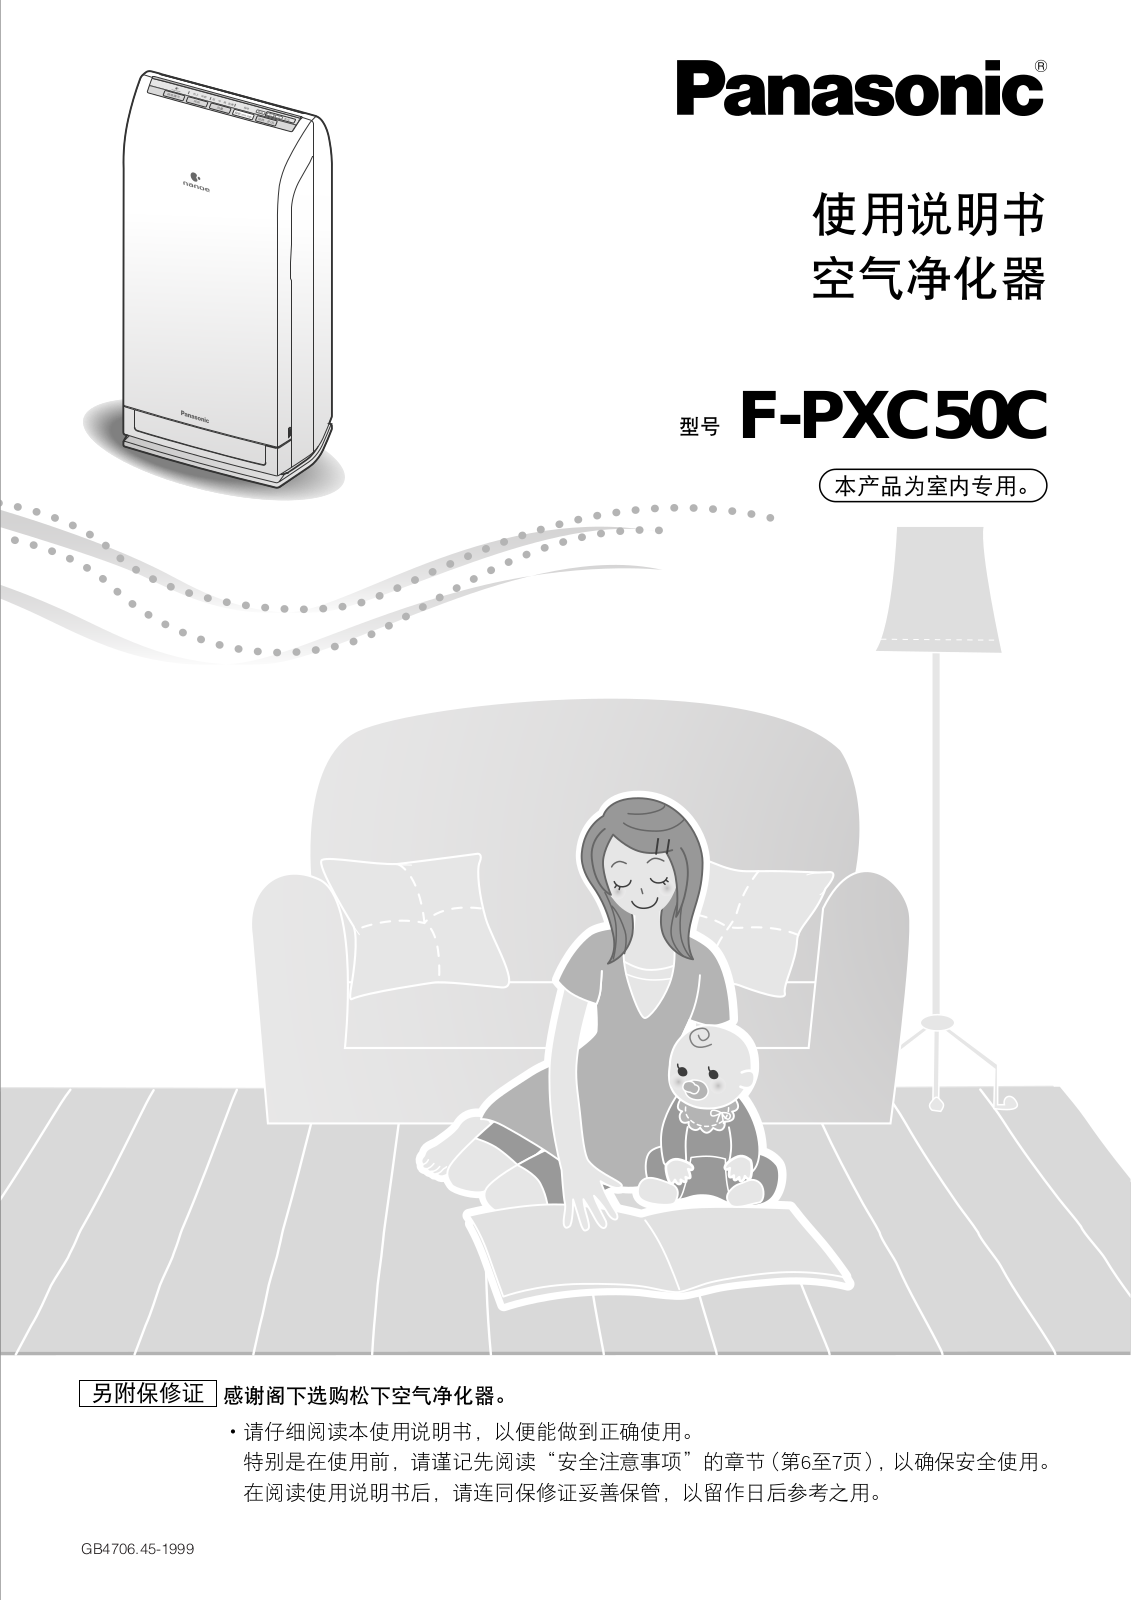 Panasonic F-PXC50C User Manual